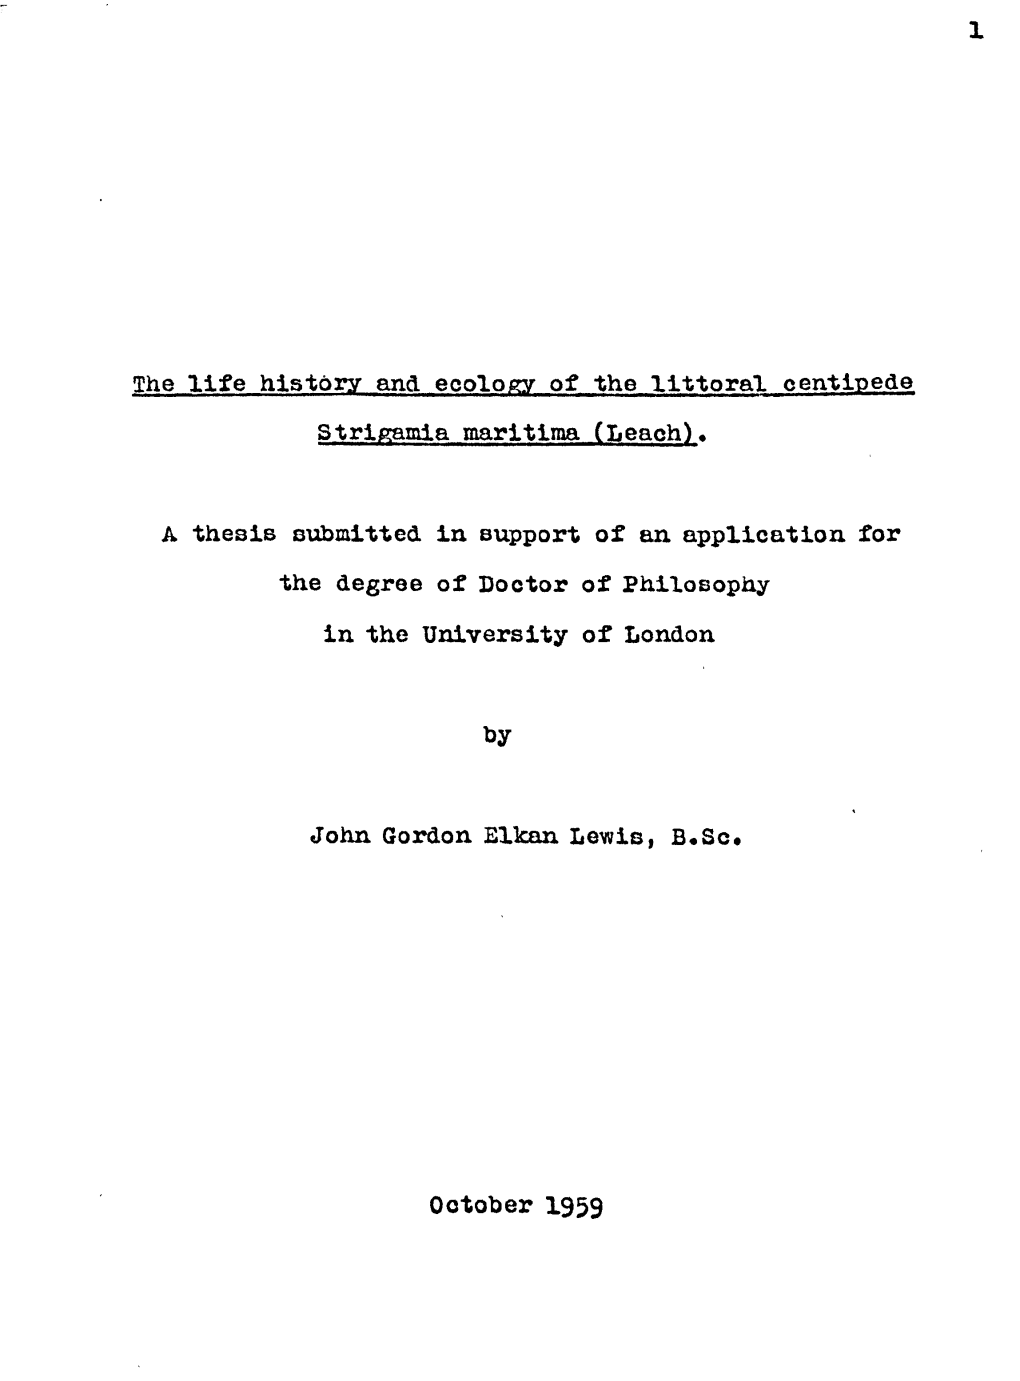 Lewislifehistory1959.Pdf (7.056Mb)